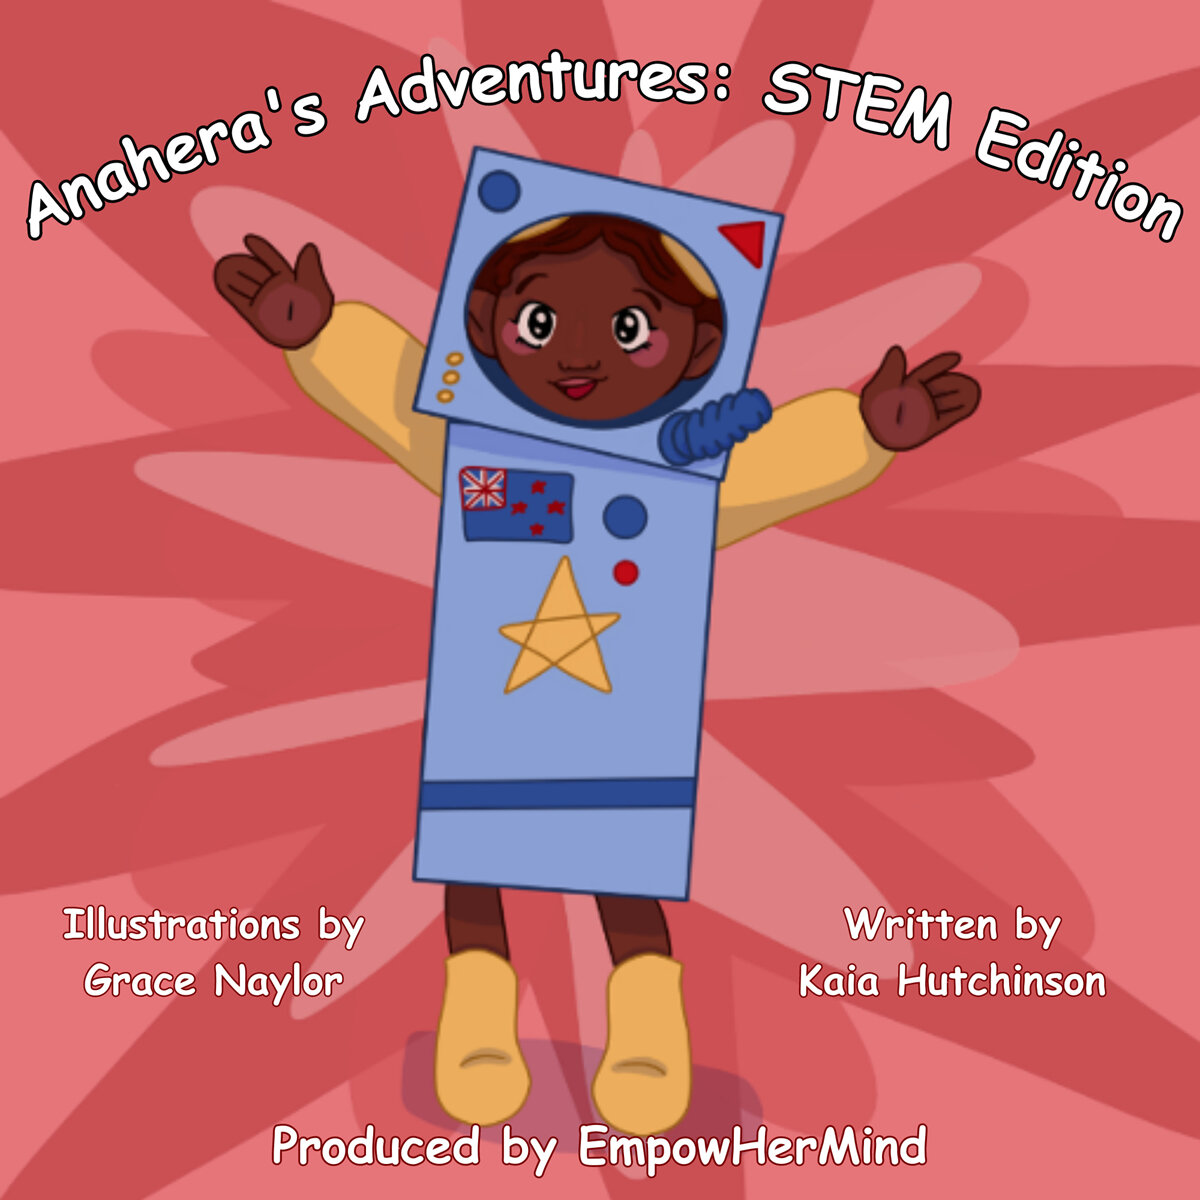 Anahera's Adventures: STEM Edition!